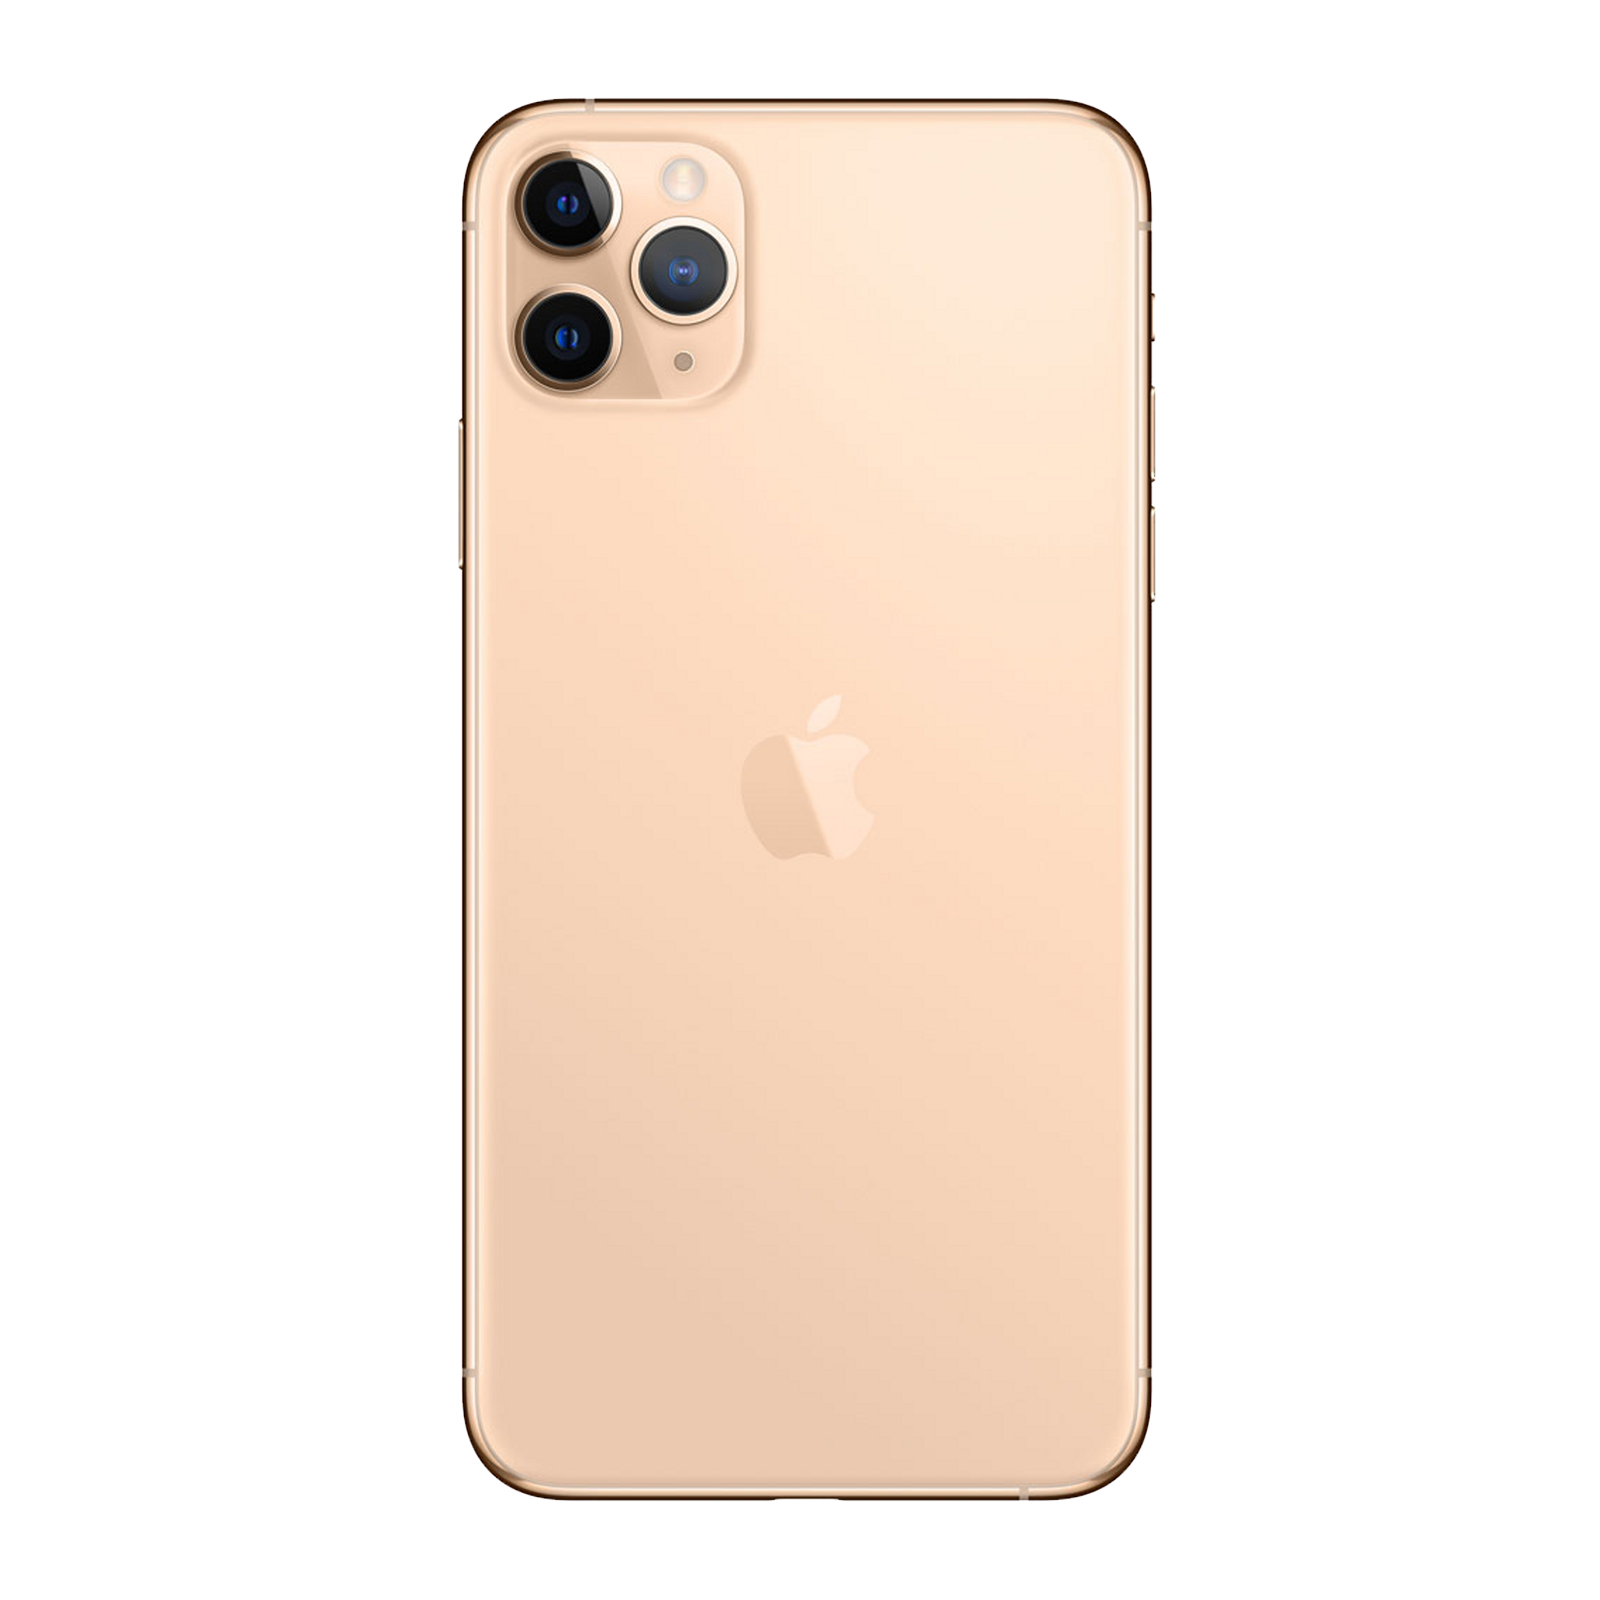 Apple iPhone 11 Pro 256GB Gold Good - Unlocked